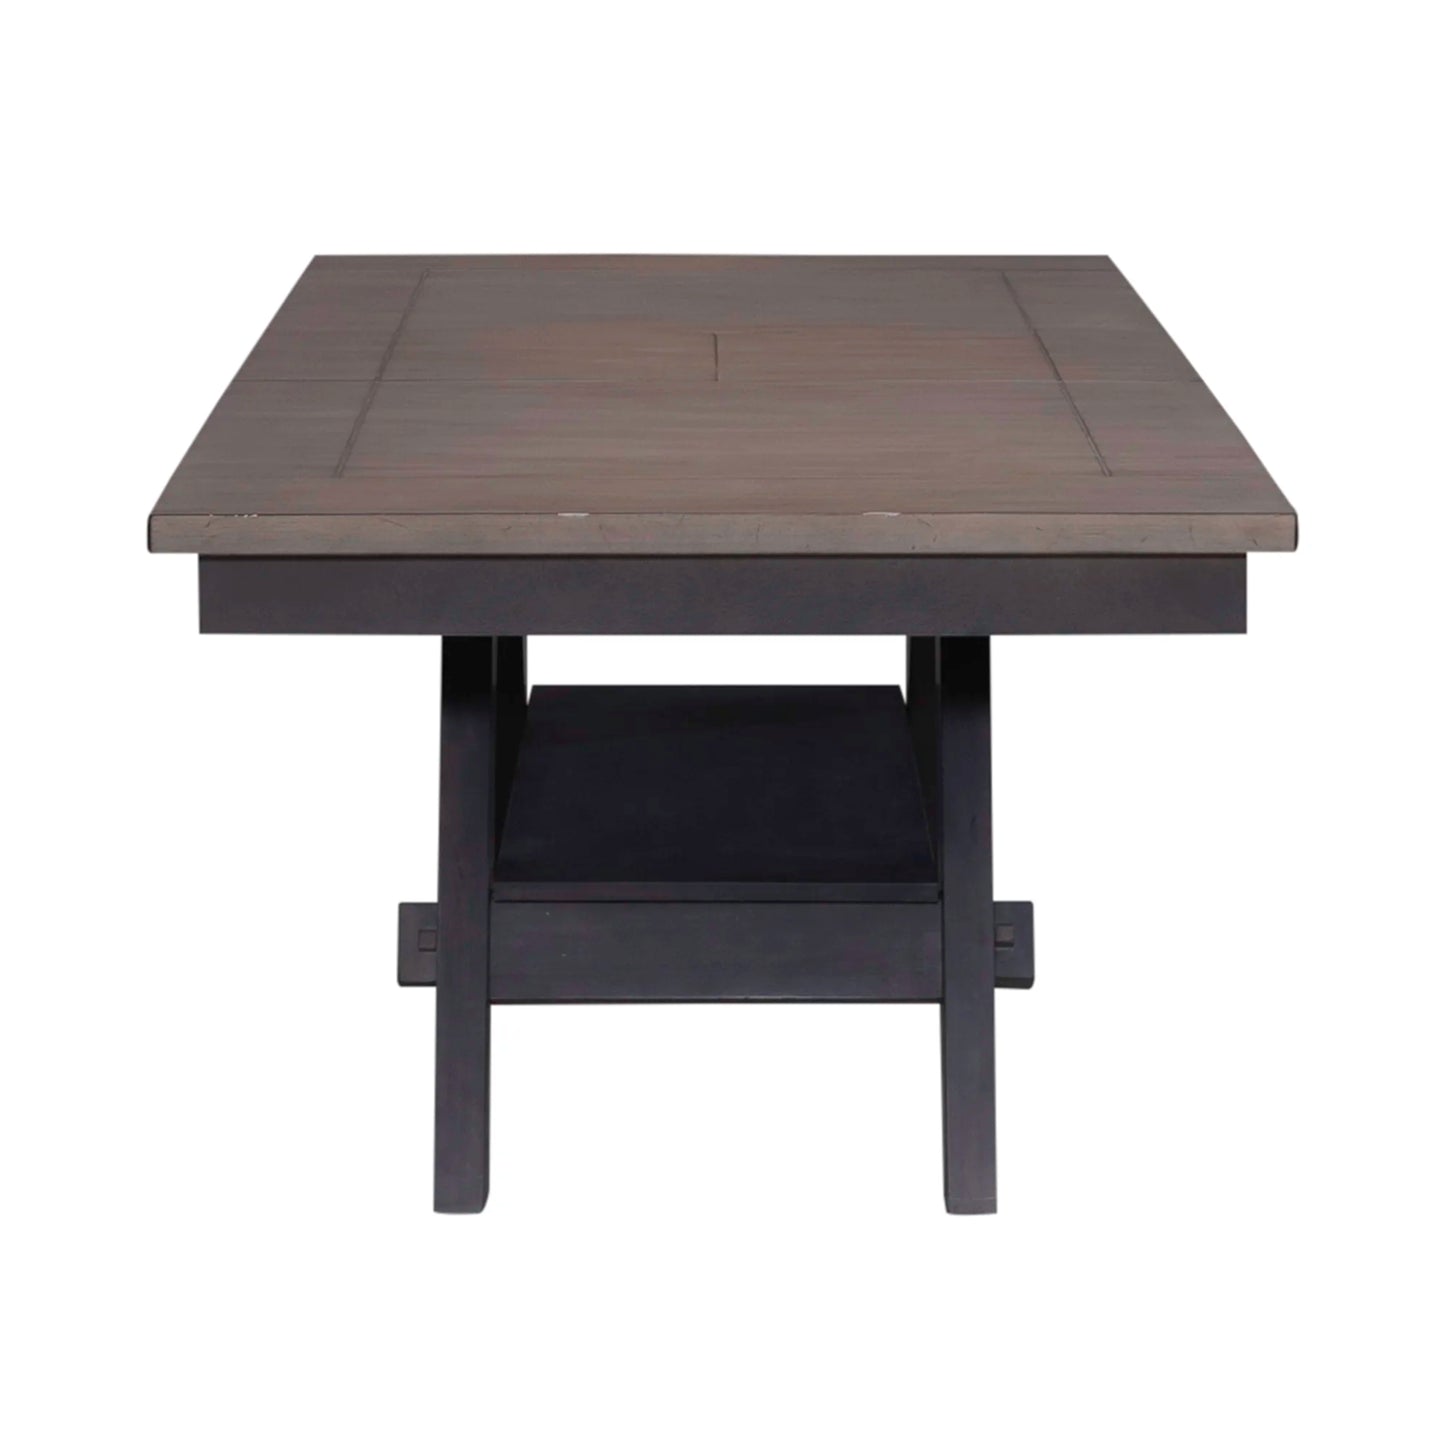 Lawson - Pedestal Table Set - Dark Gray 7